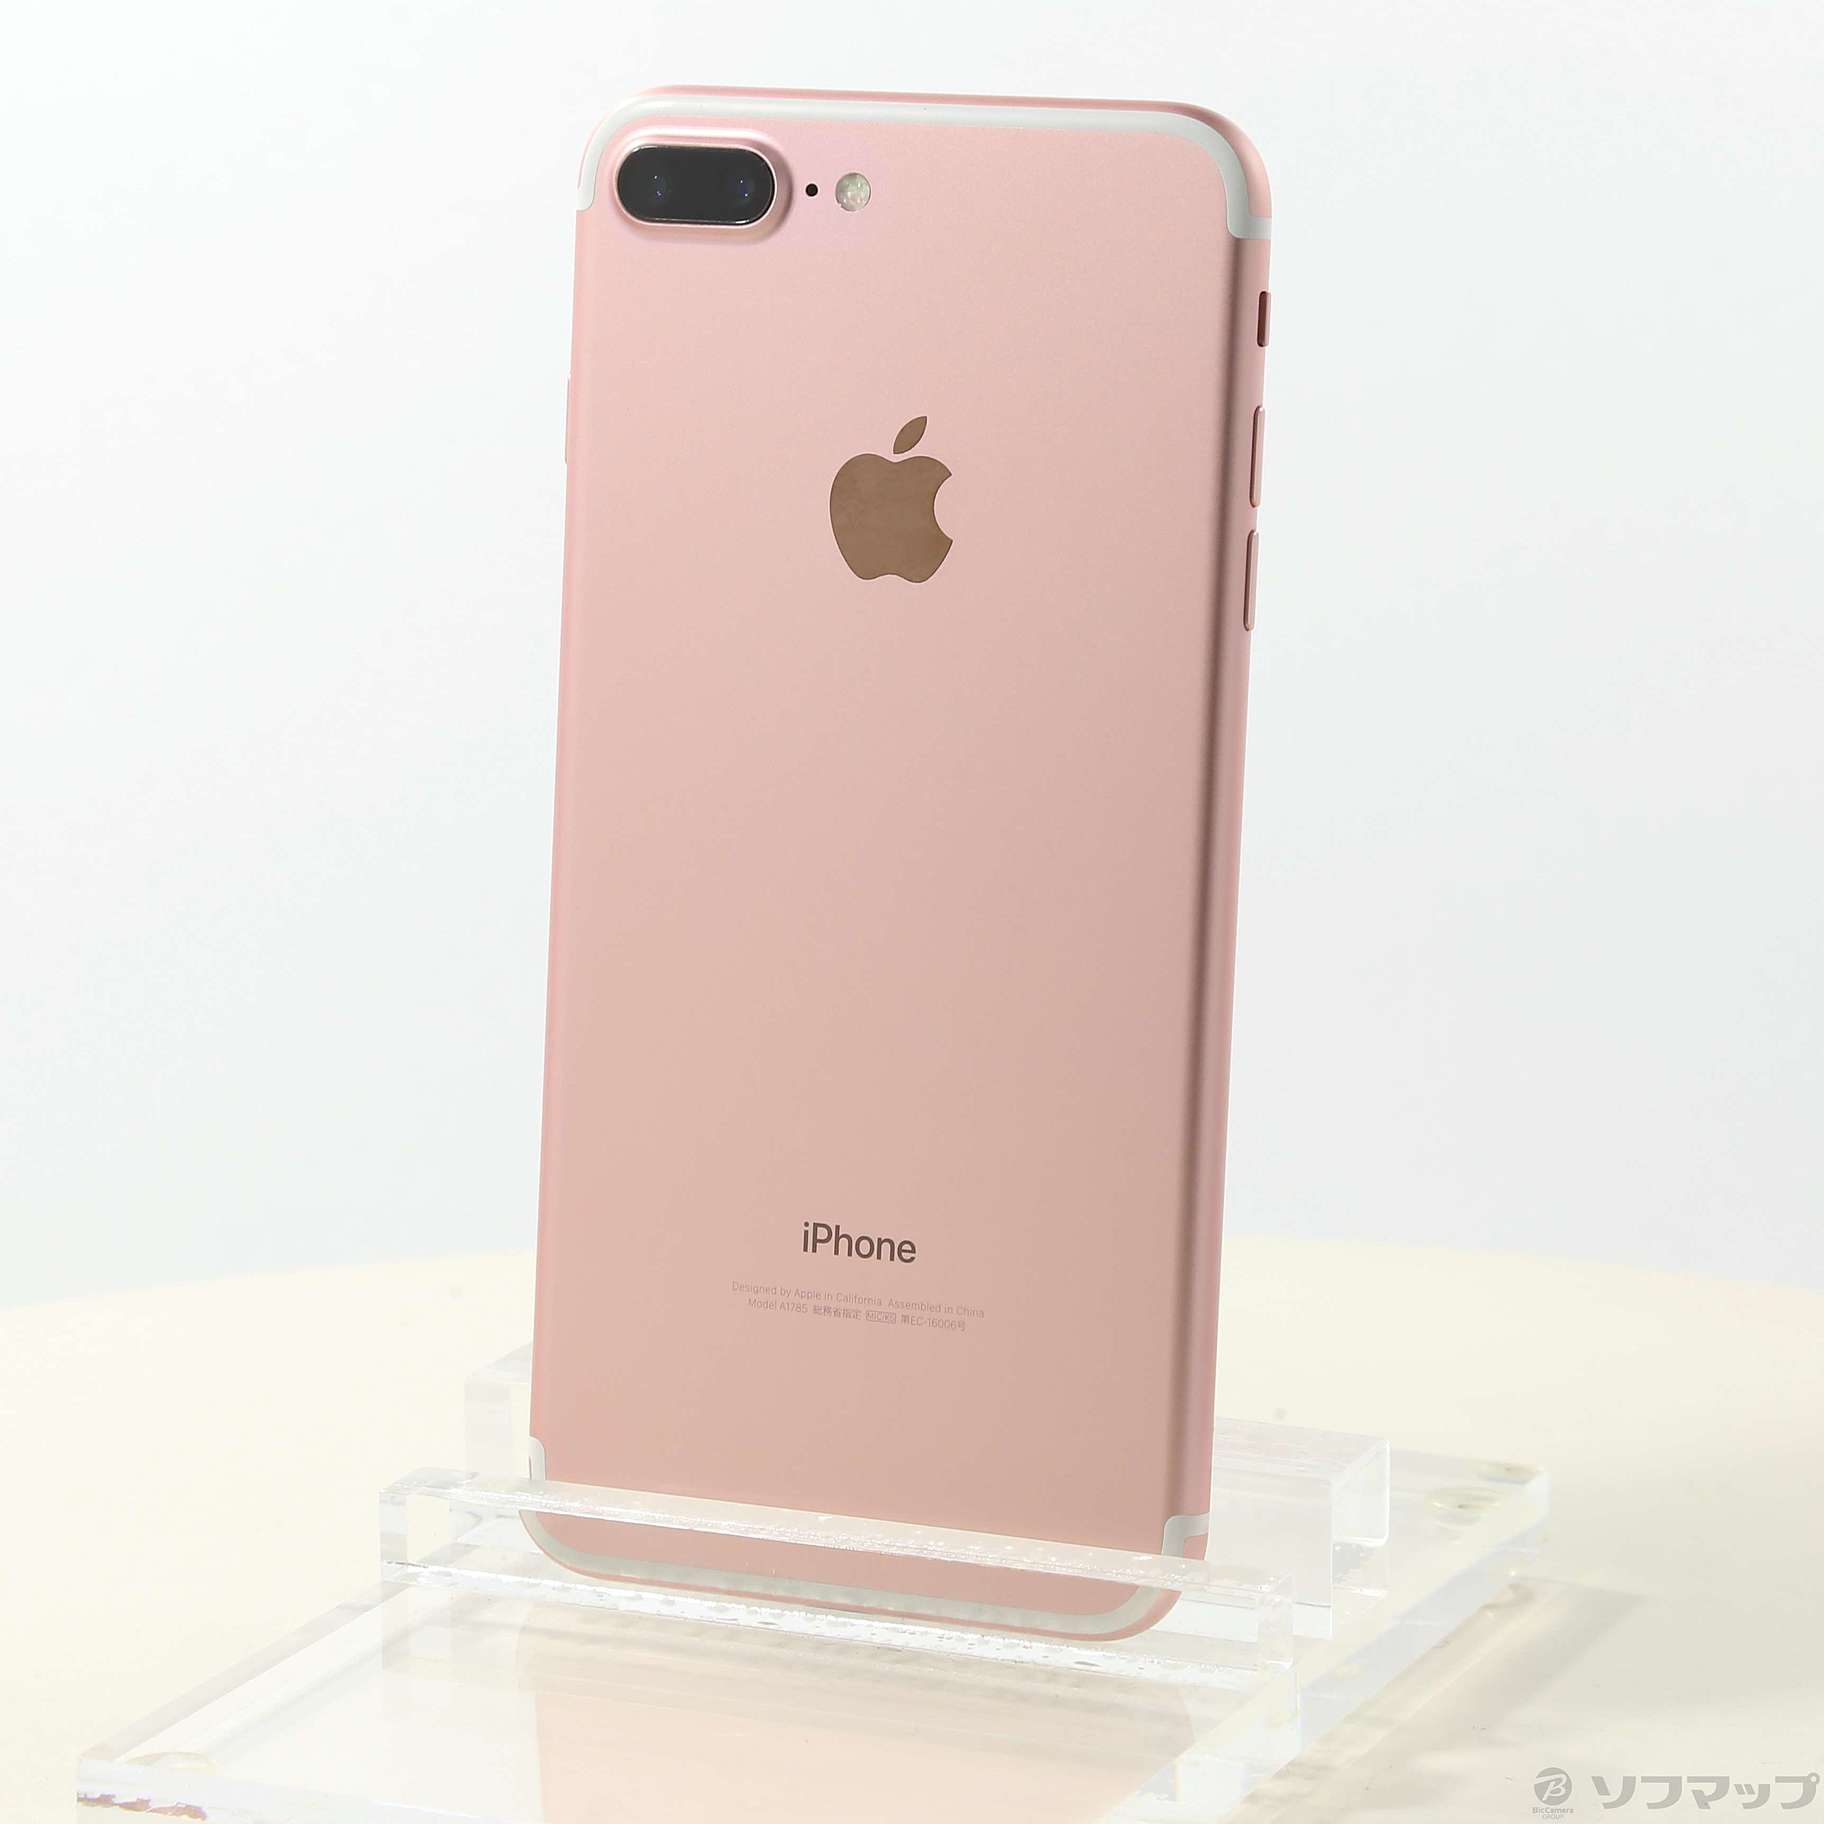 iPhone 7plus SIMフリー 32GB ローズゴールド